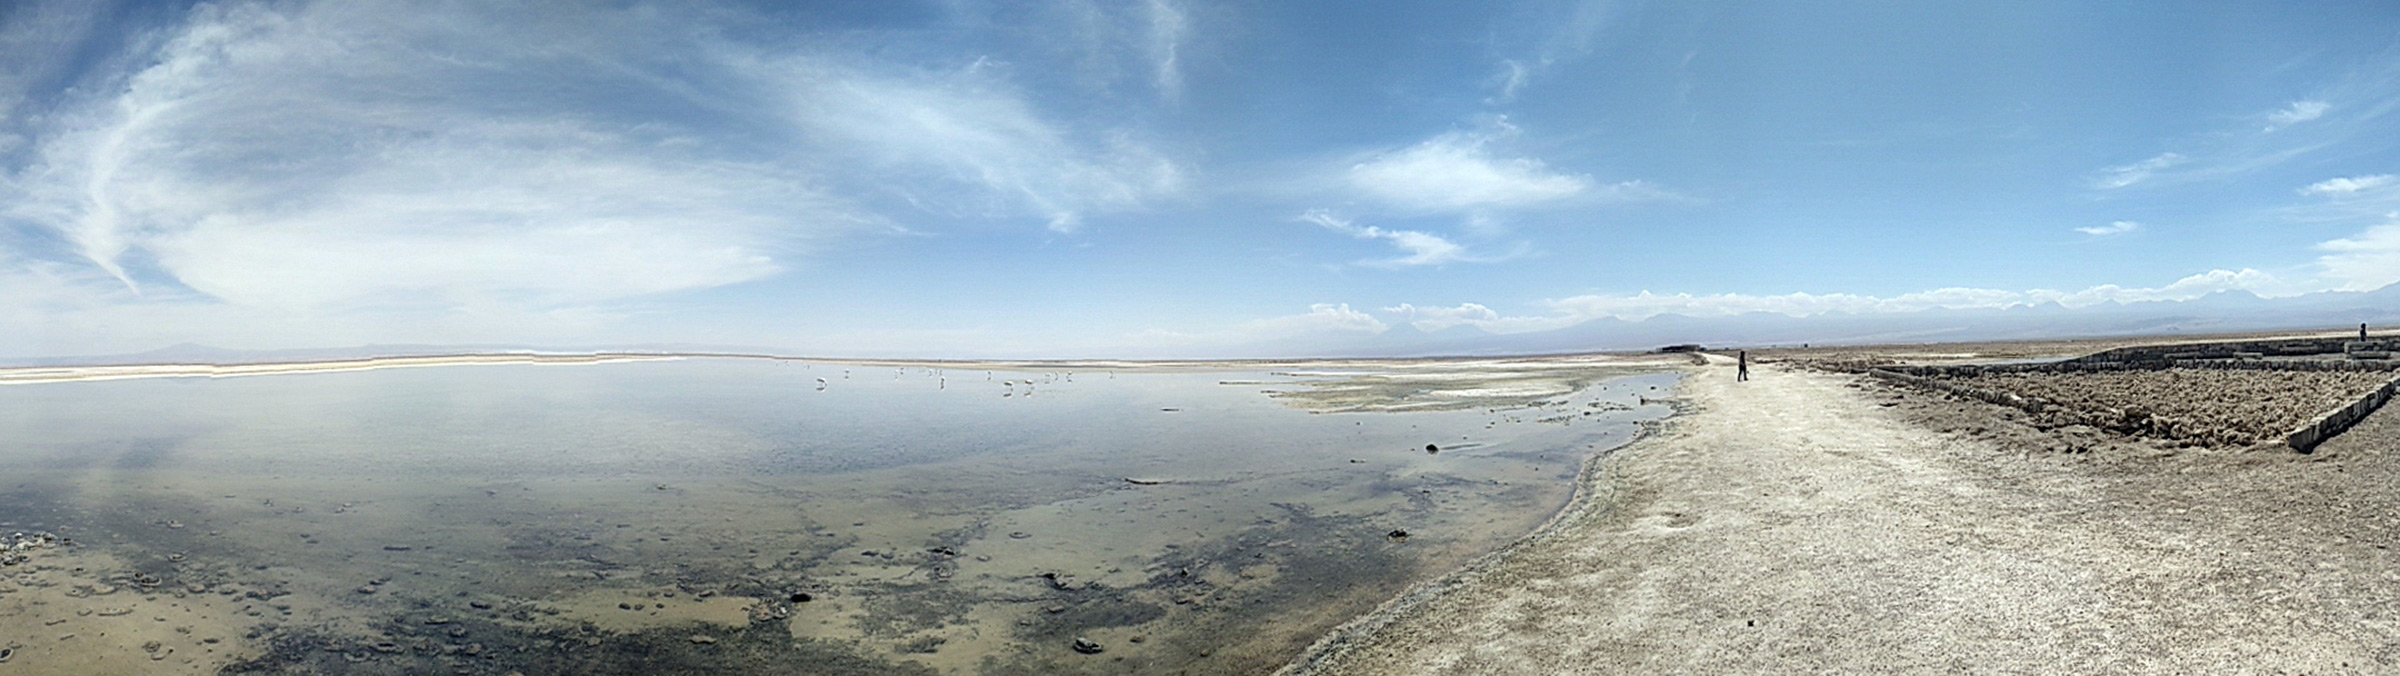 Chile Atacama Wüste Christian Bennat Life Judith Kautz Fotografie